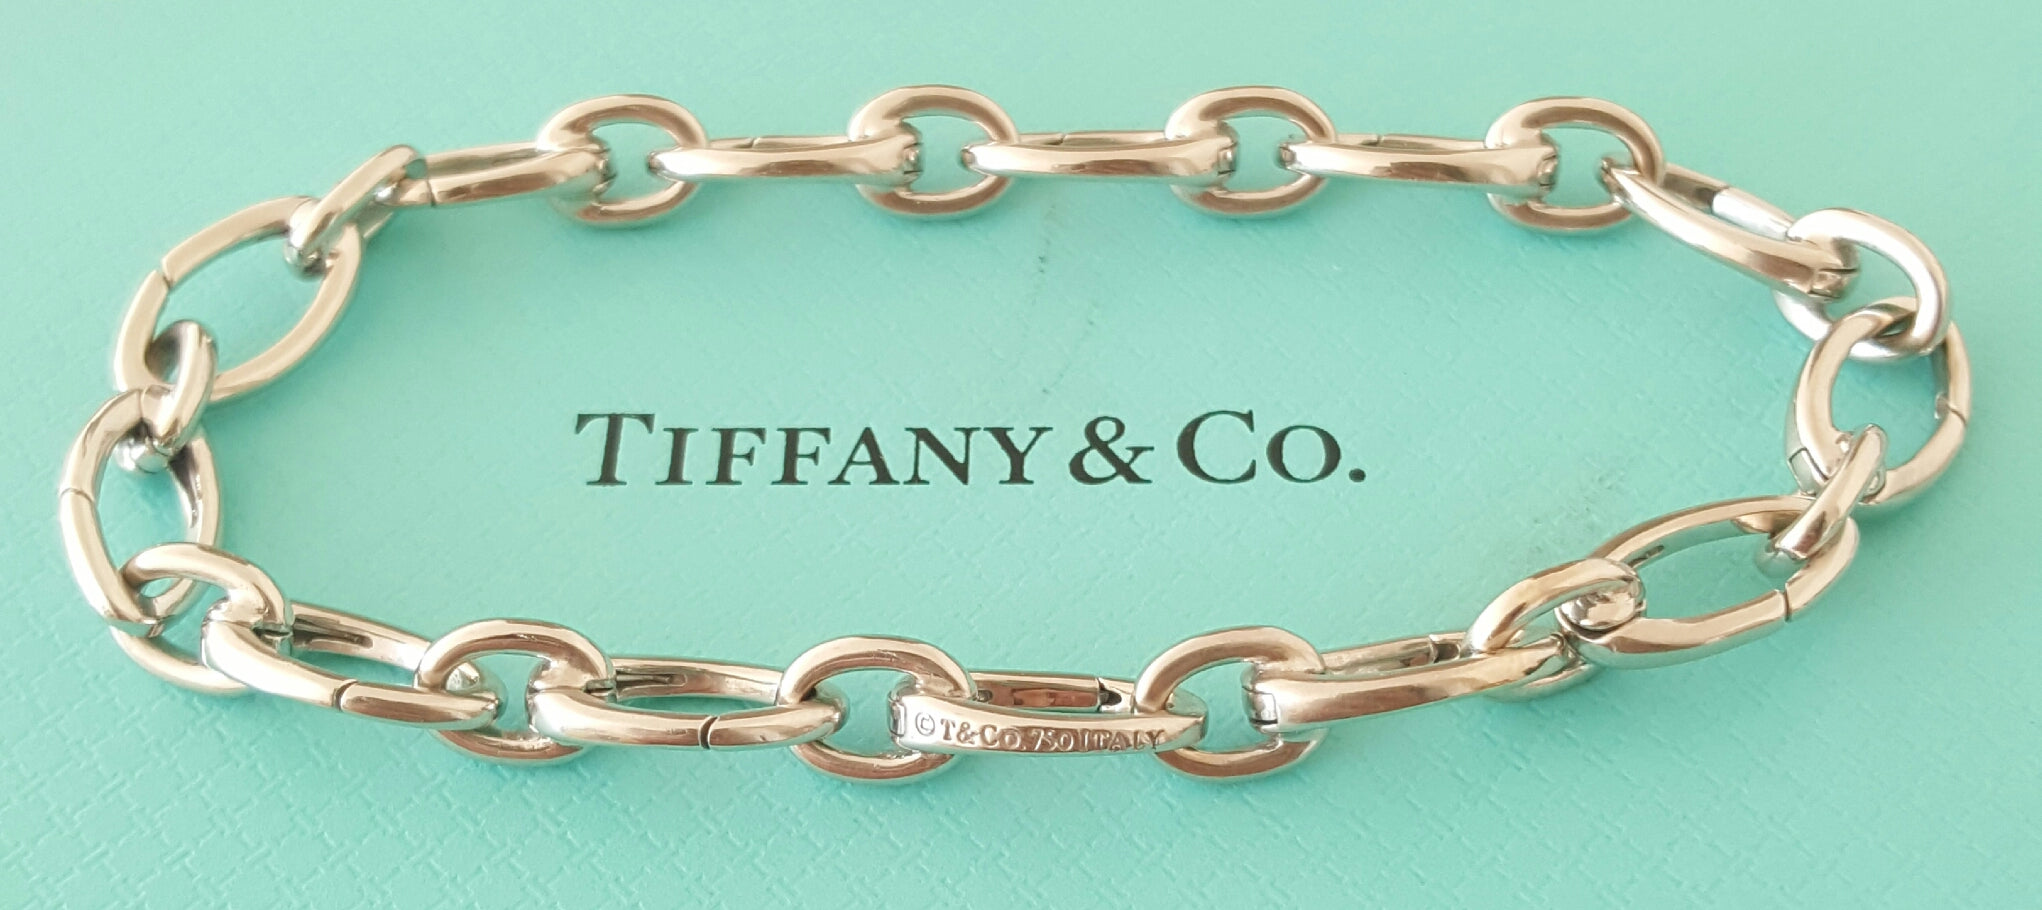 Tiffany  Co Hinged Bangle bracelet in 18k White Gold with 2 Diam